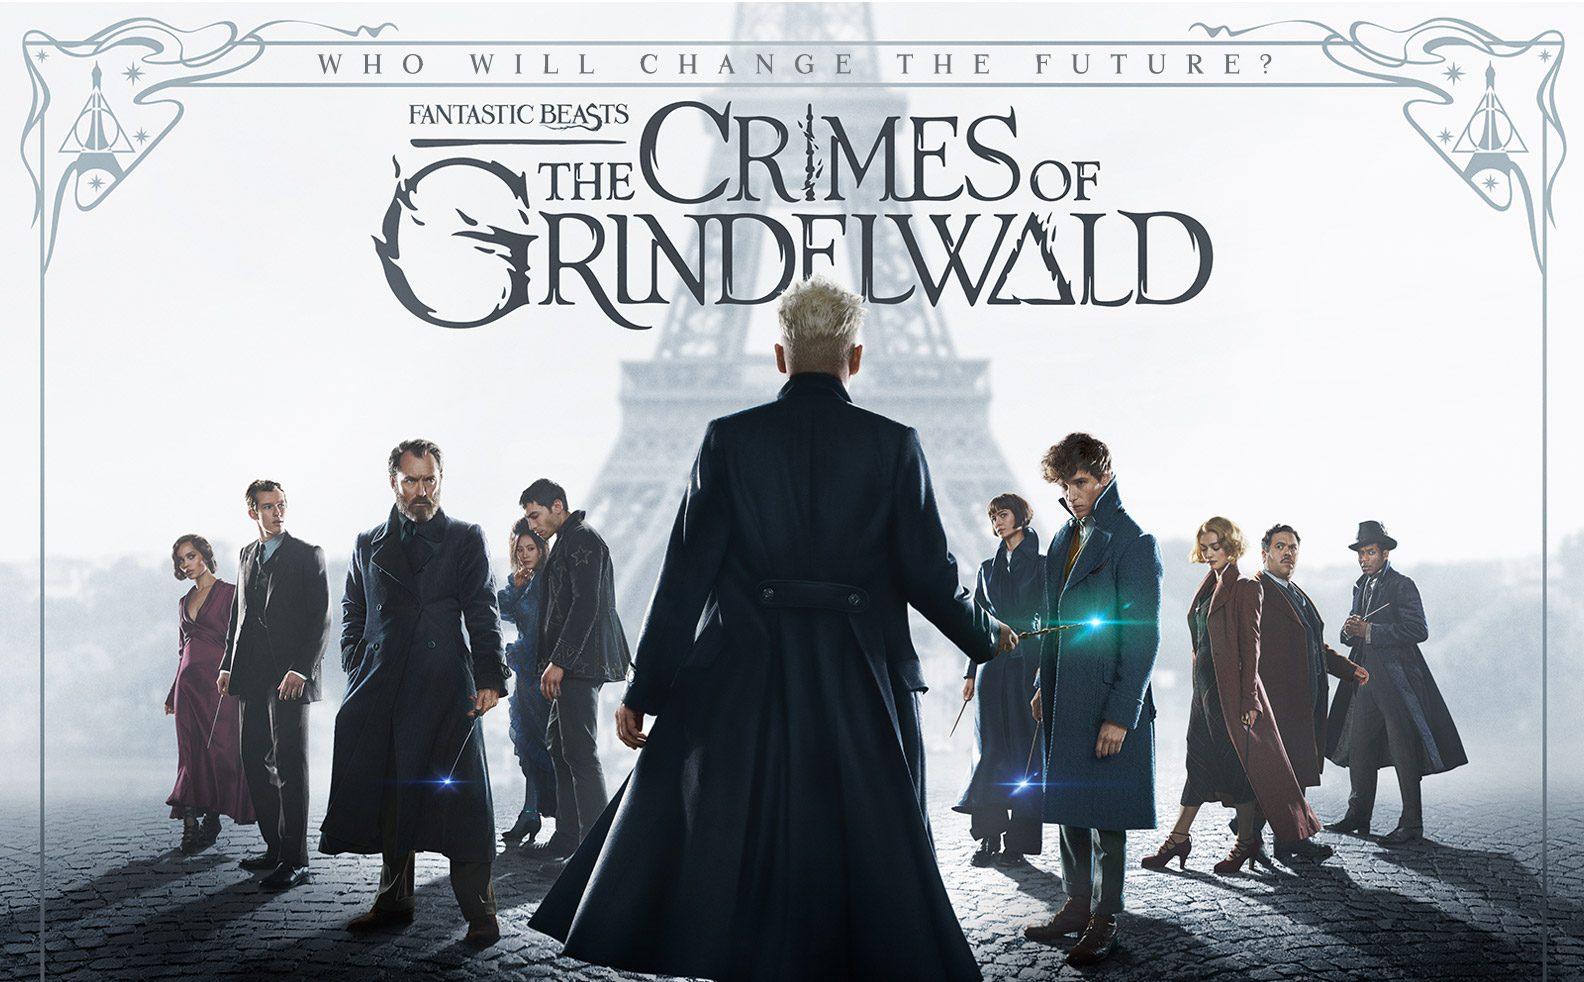 Sinh Vật Huyền Bí 2: Tội Ác Của Grindelwald-Fantastic Beasts 2: The Crimes of Grindelwald